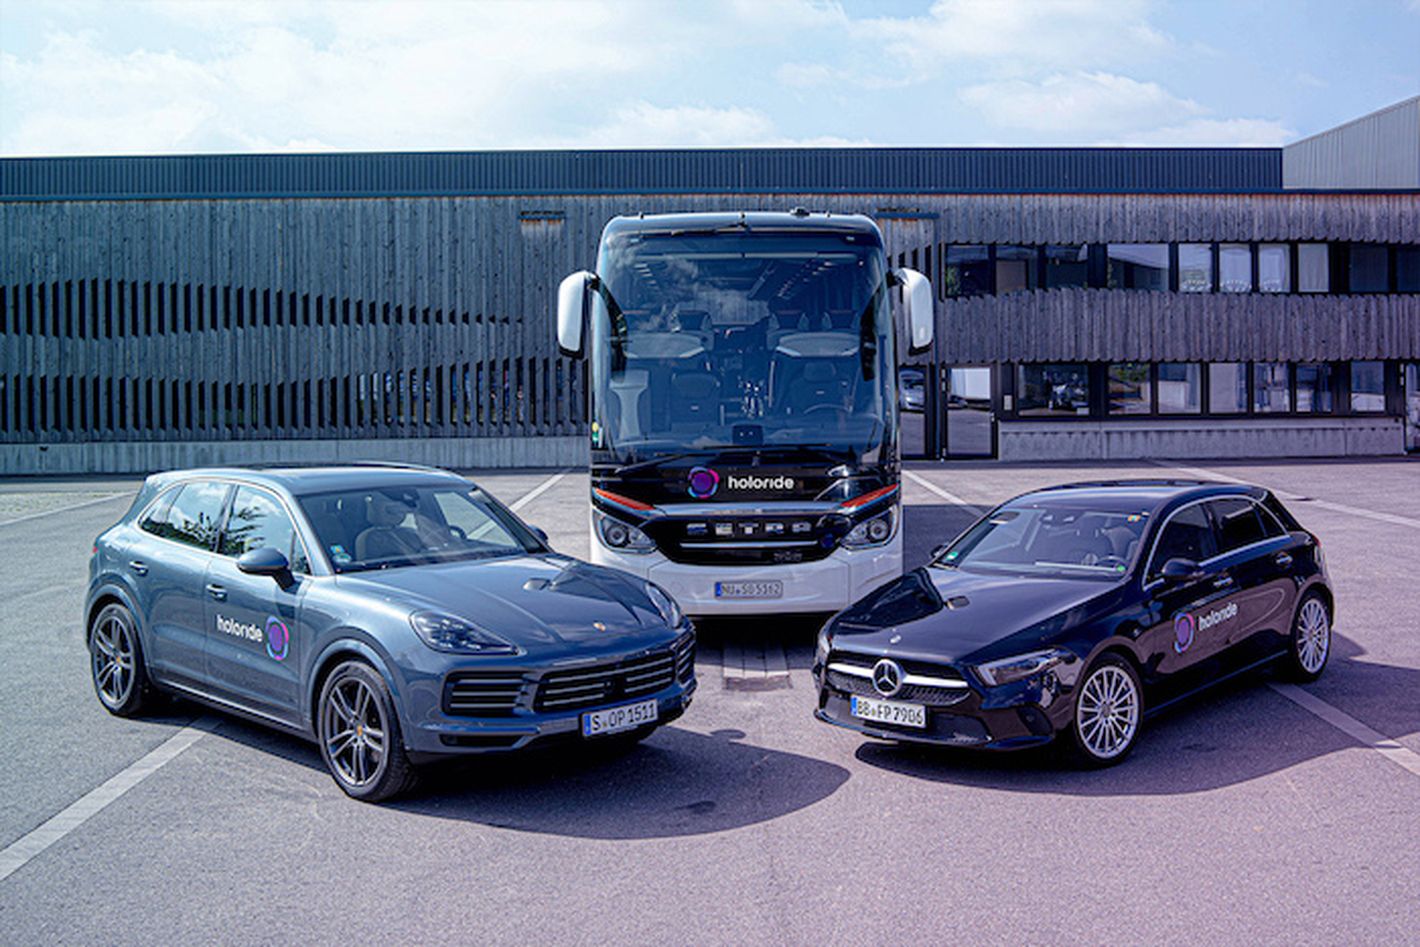 holoride technology works in Porsche, Daimler and EvoBus vehicle